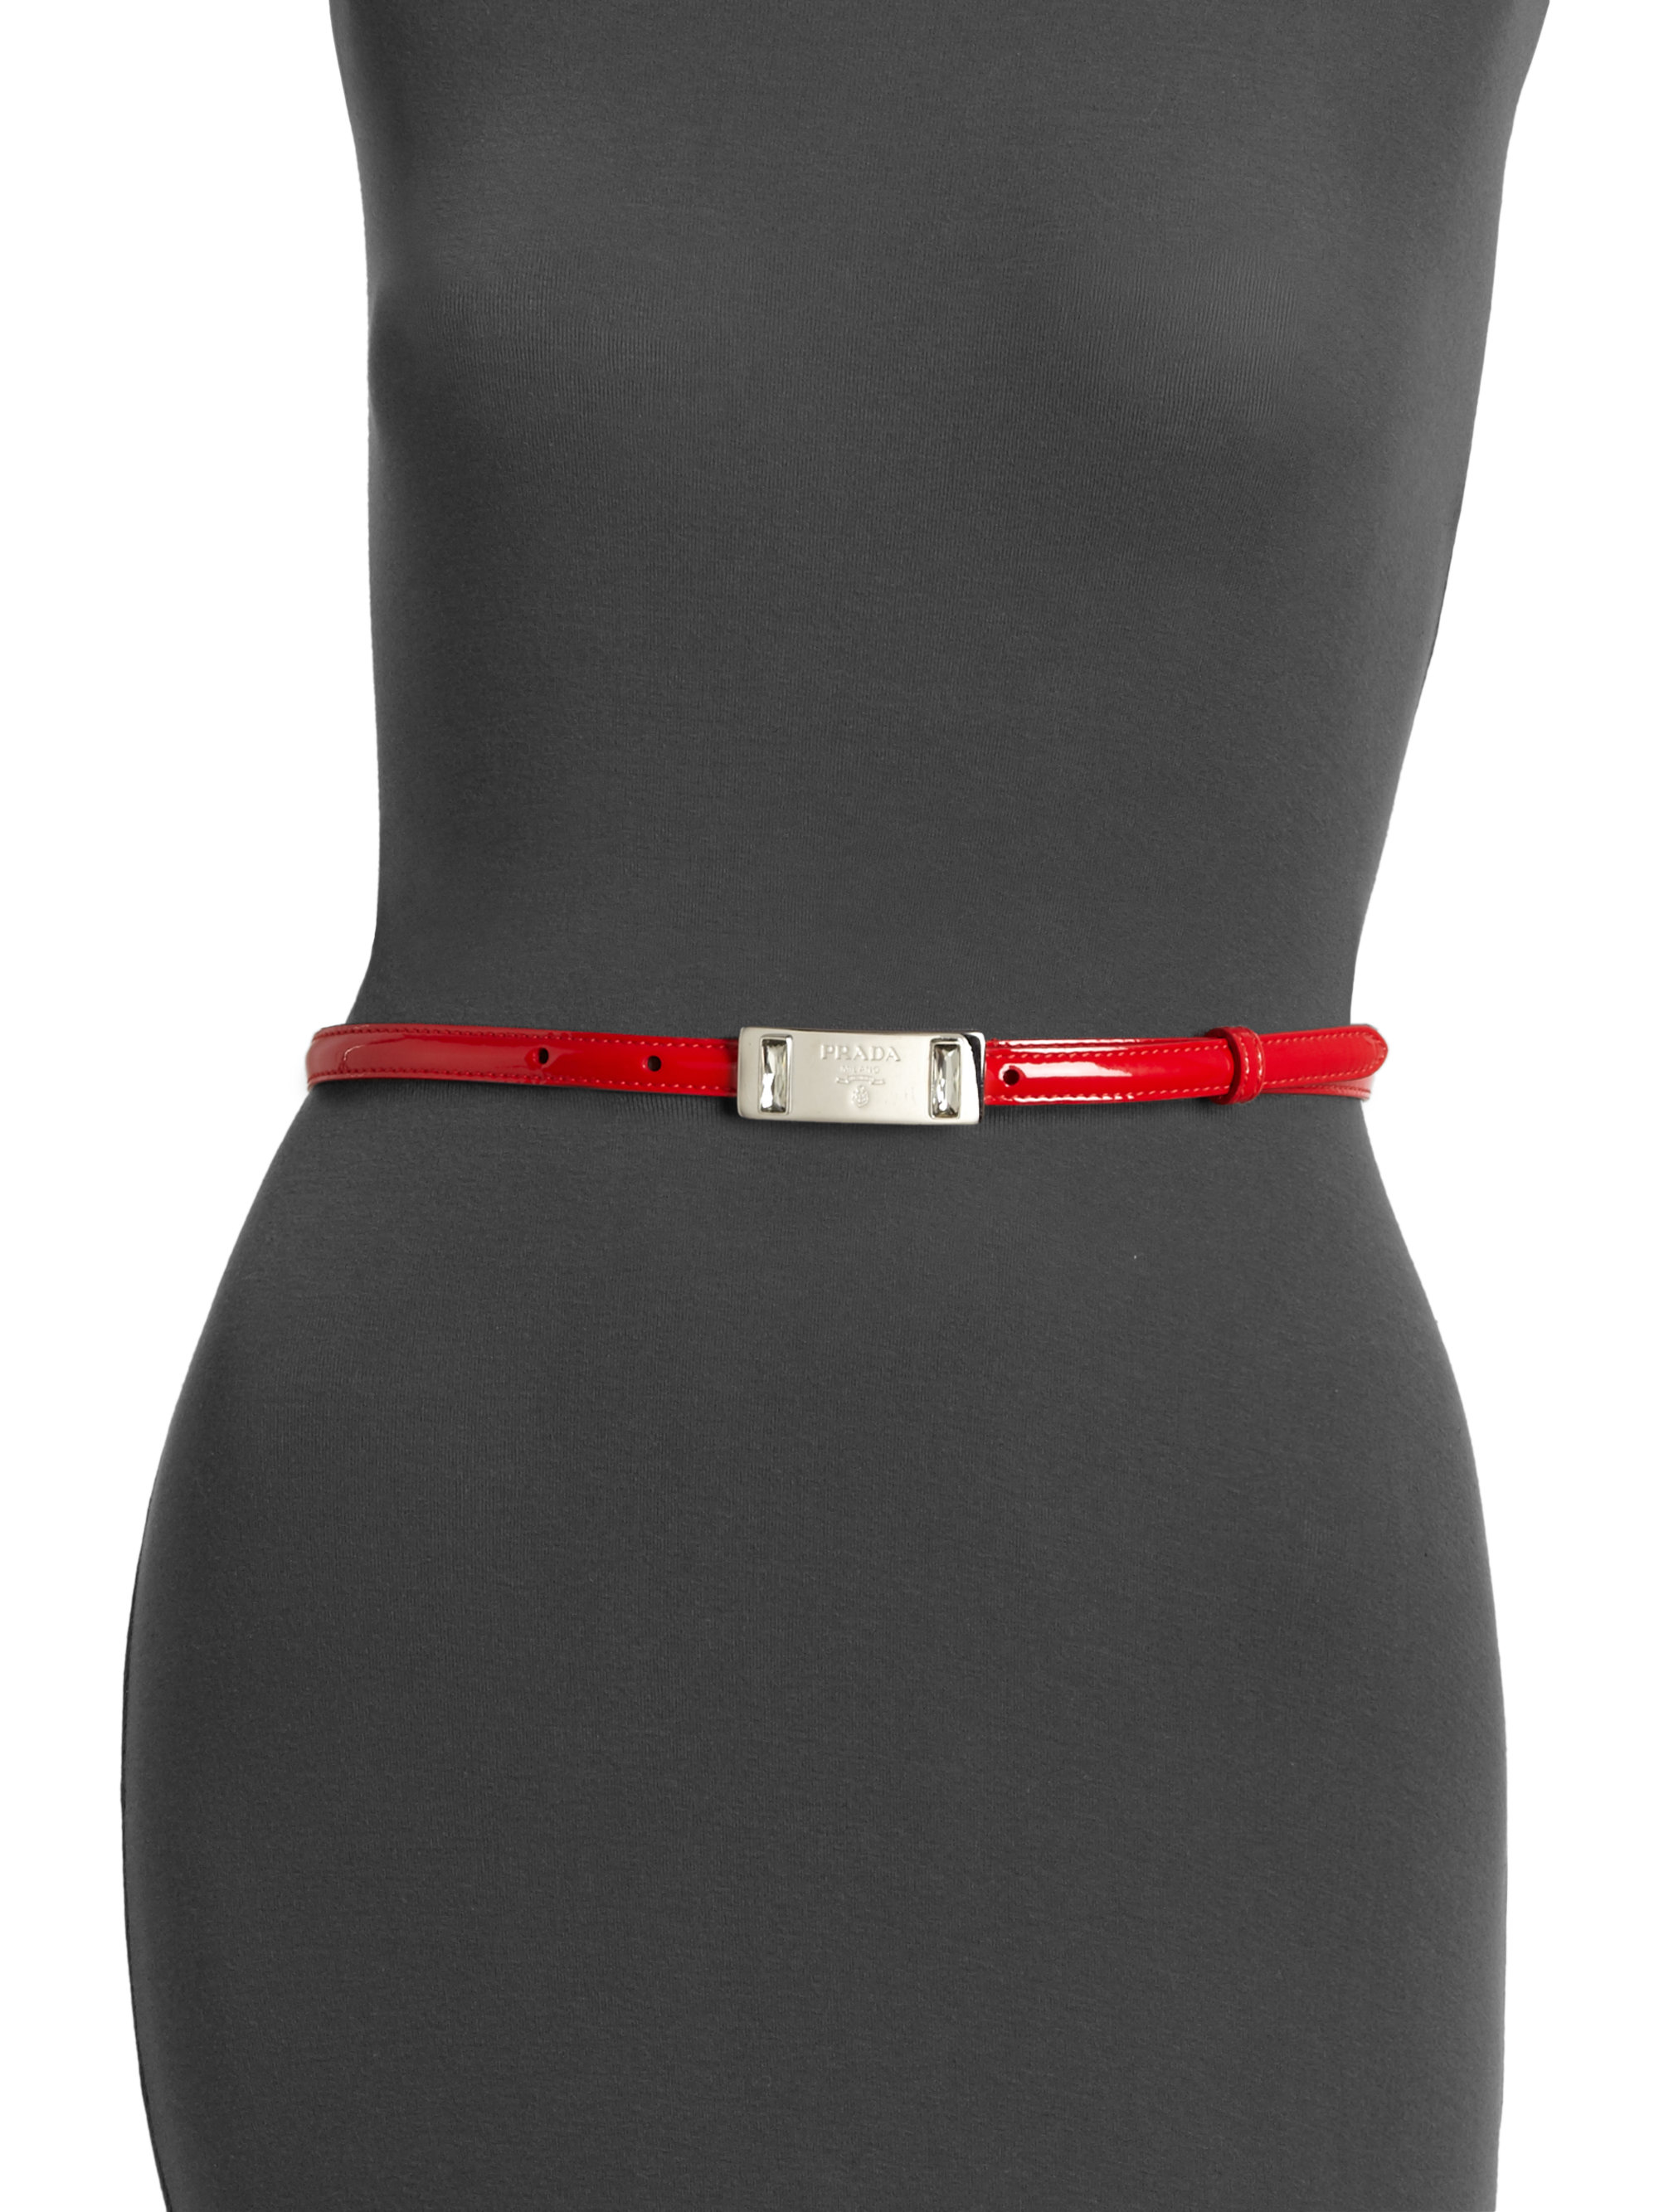 Prada Patent Leather Logo Belt in Red | Lyst  